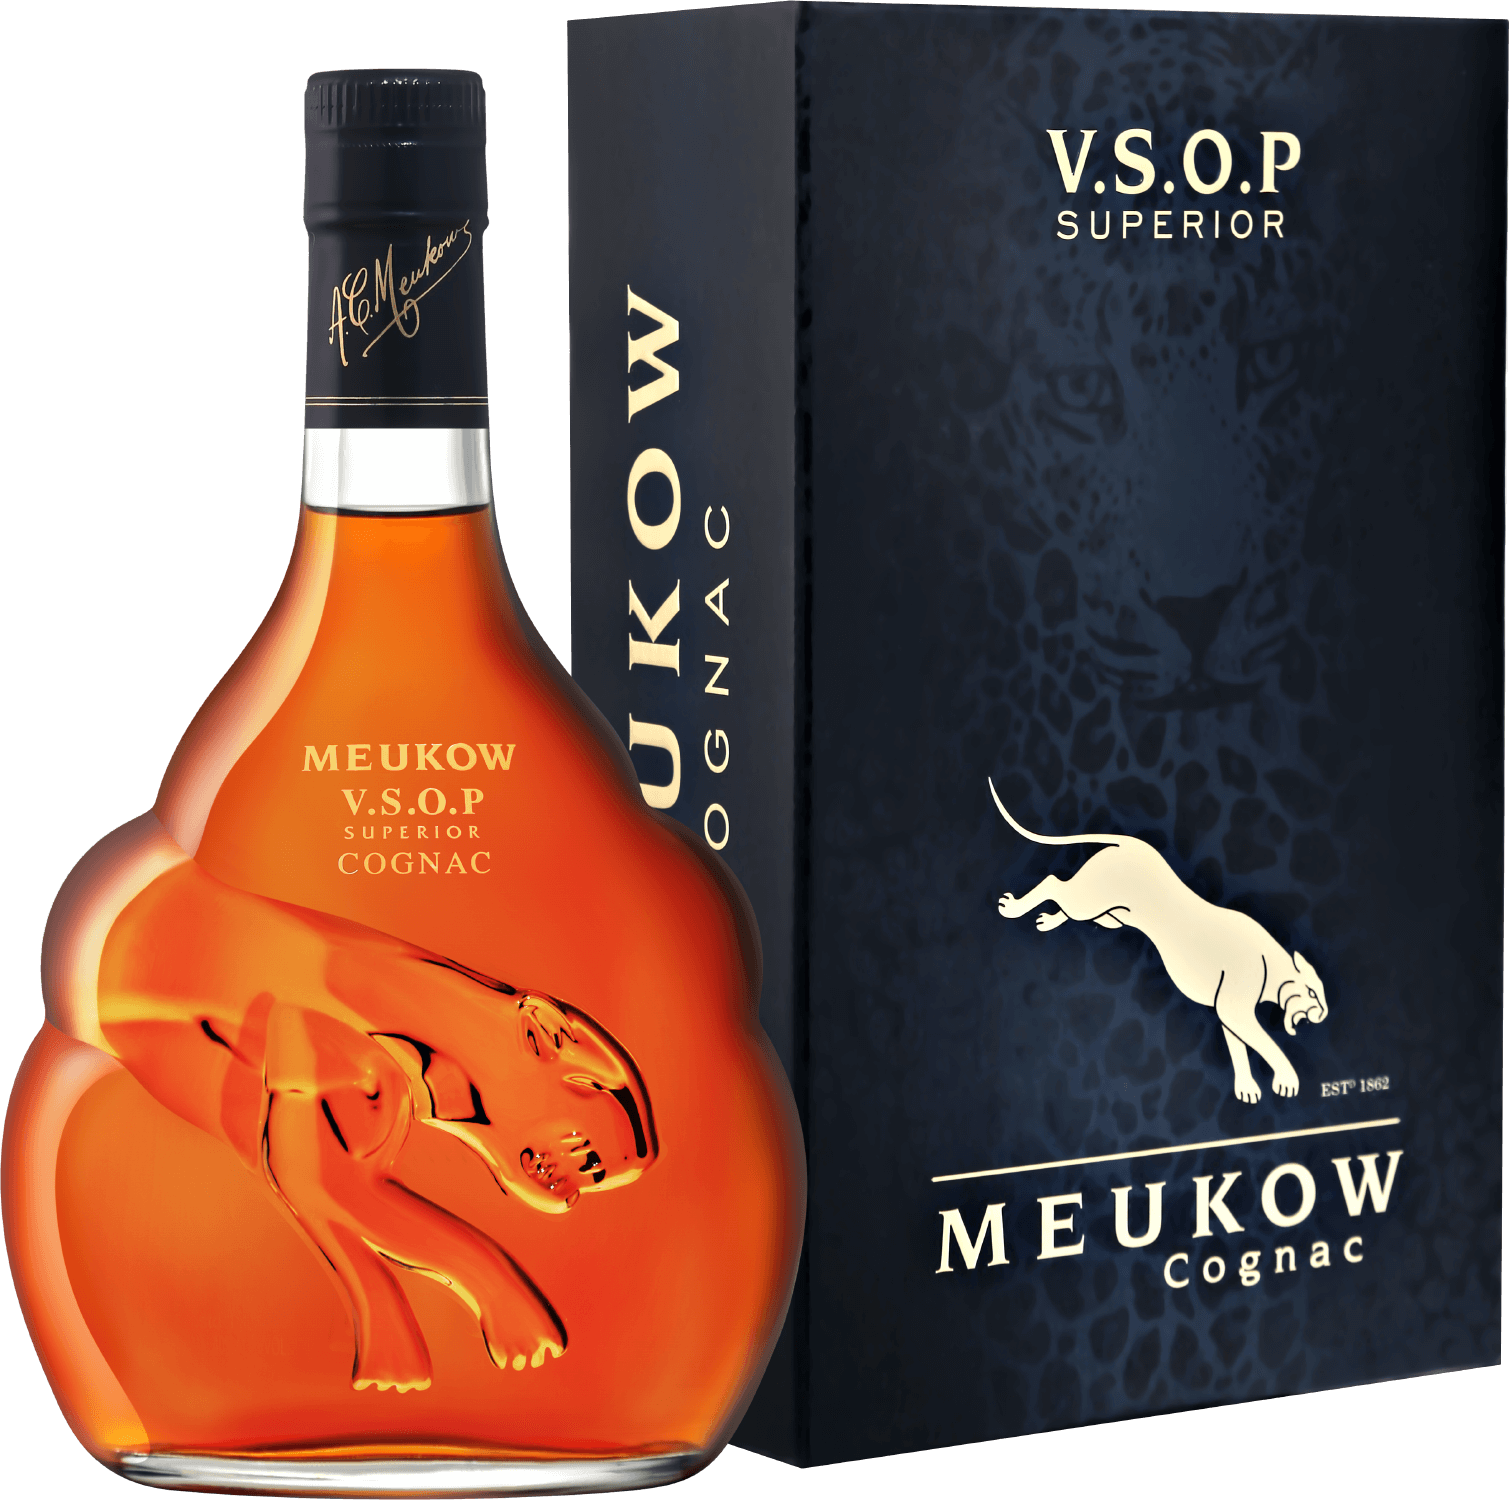 Meukow Cognac VSOP Superior (gift box)